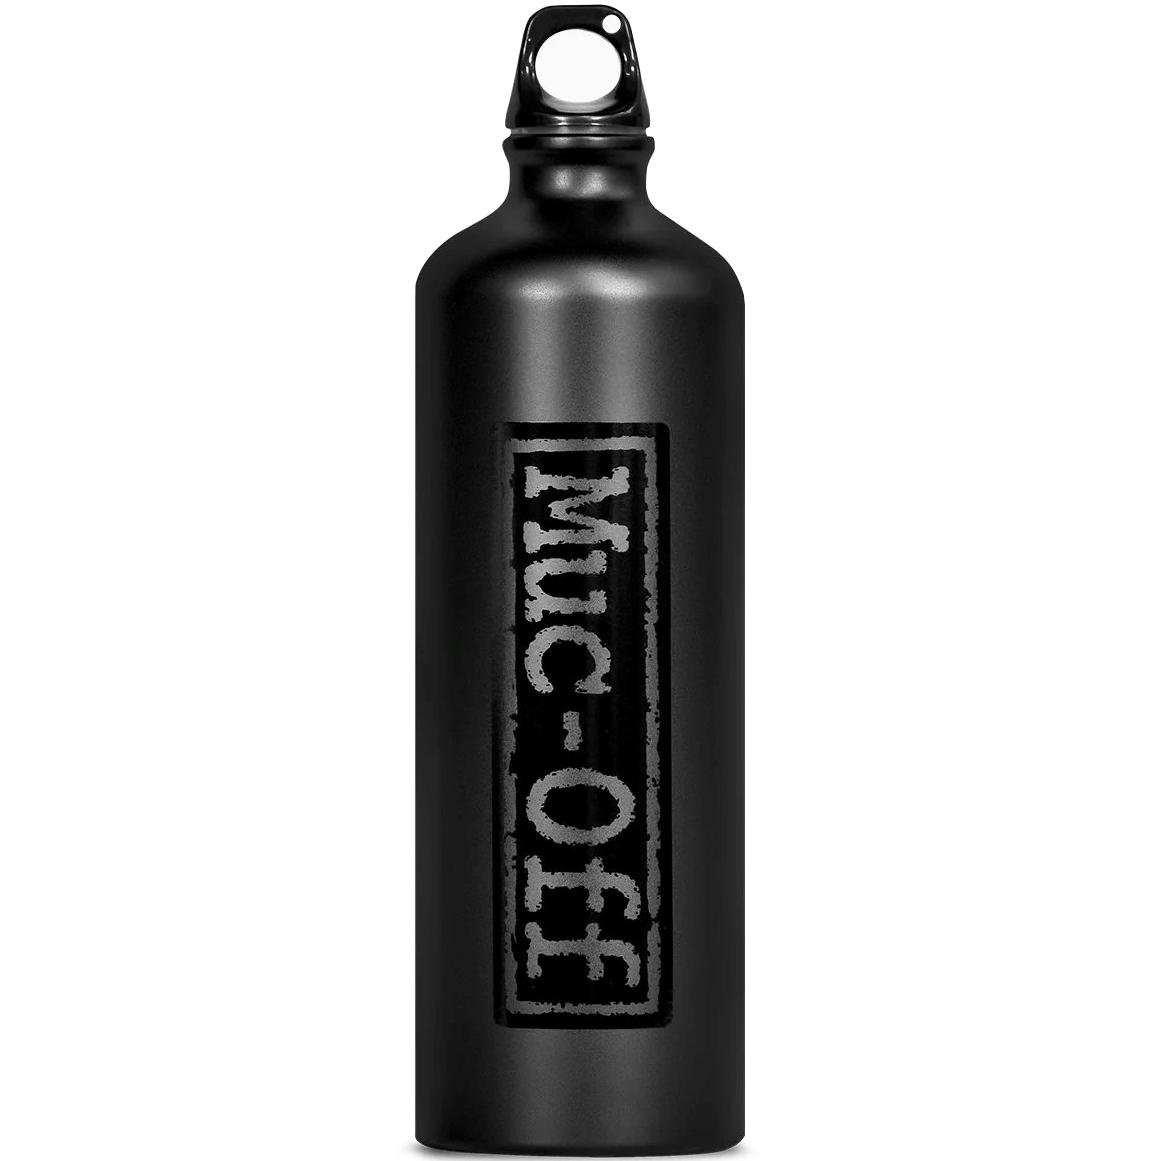 Productfoto van Muc-Off Project Green Aluminium Bottle - black